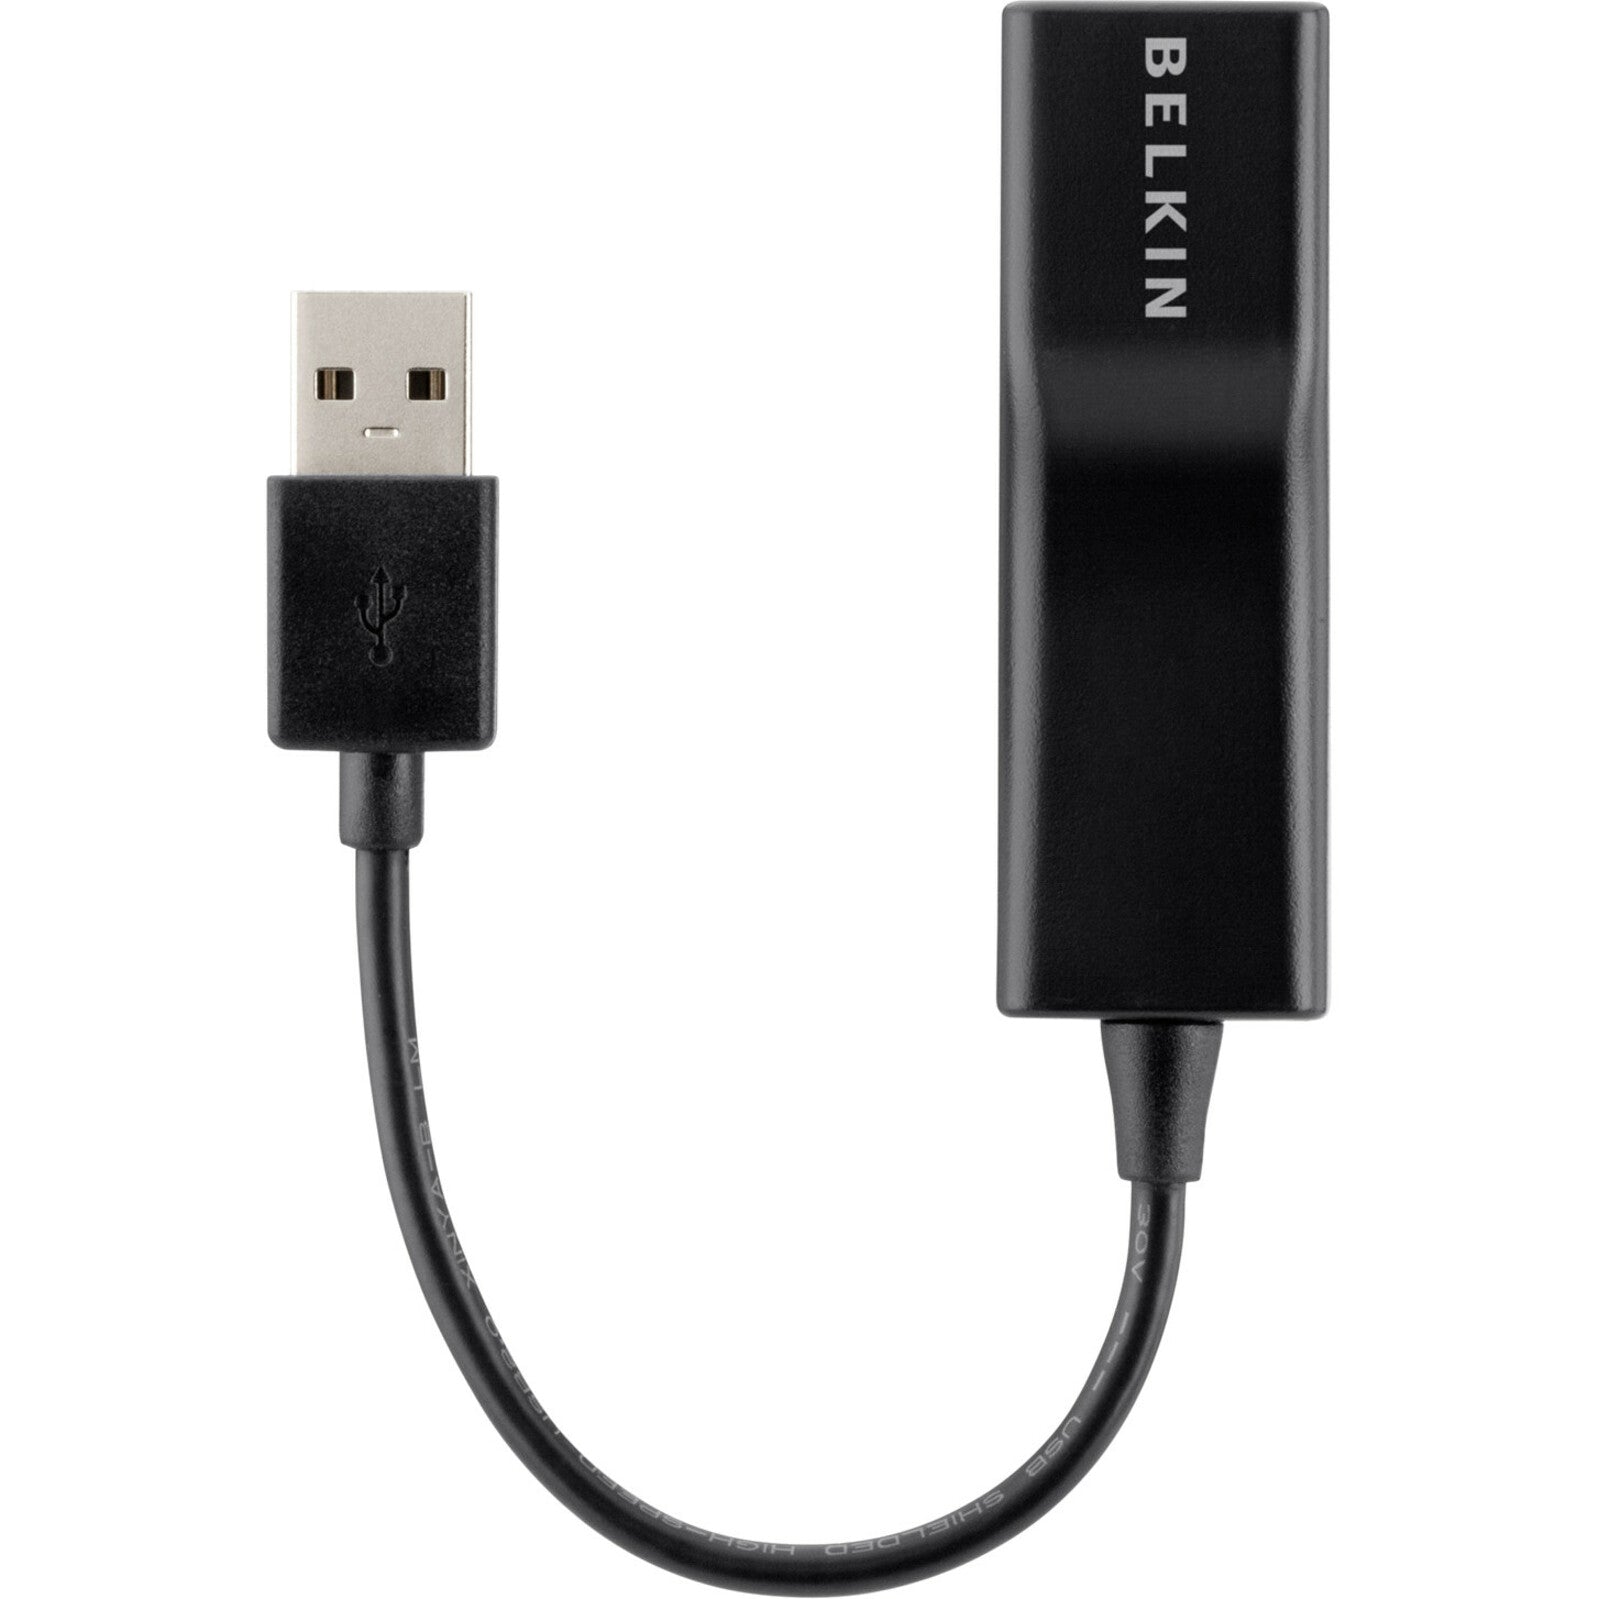 Belkin F4U047BT USB 2.0 Ethernet Adapter, Fast Ethernet Card, 10/100Base-TX